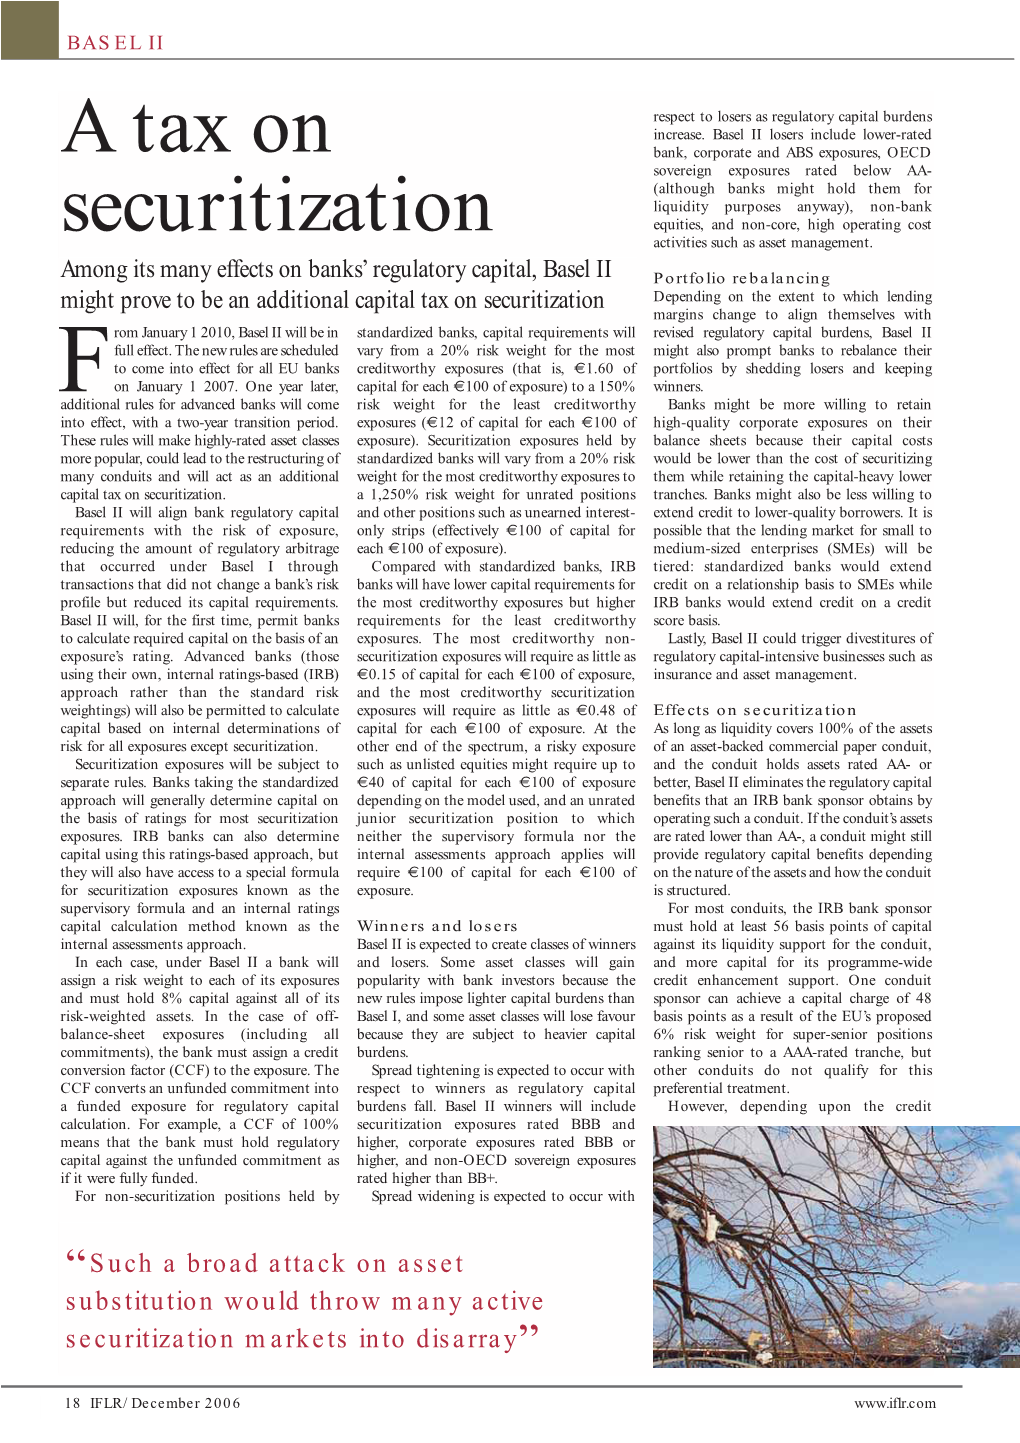 A Tax on Securitization